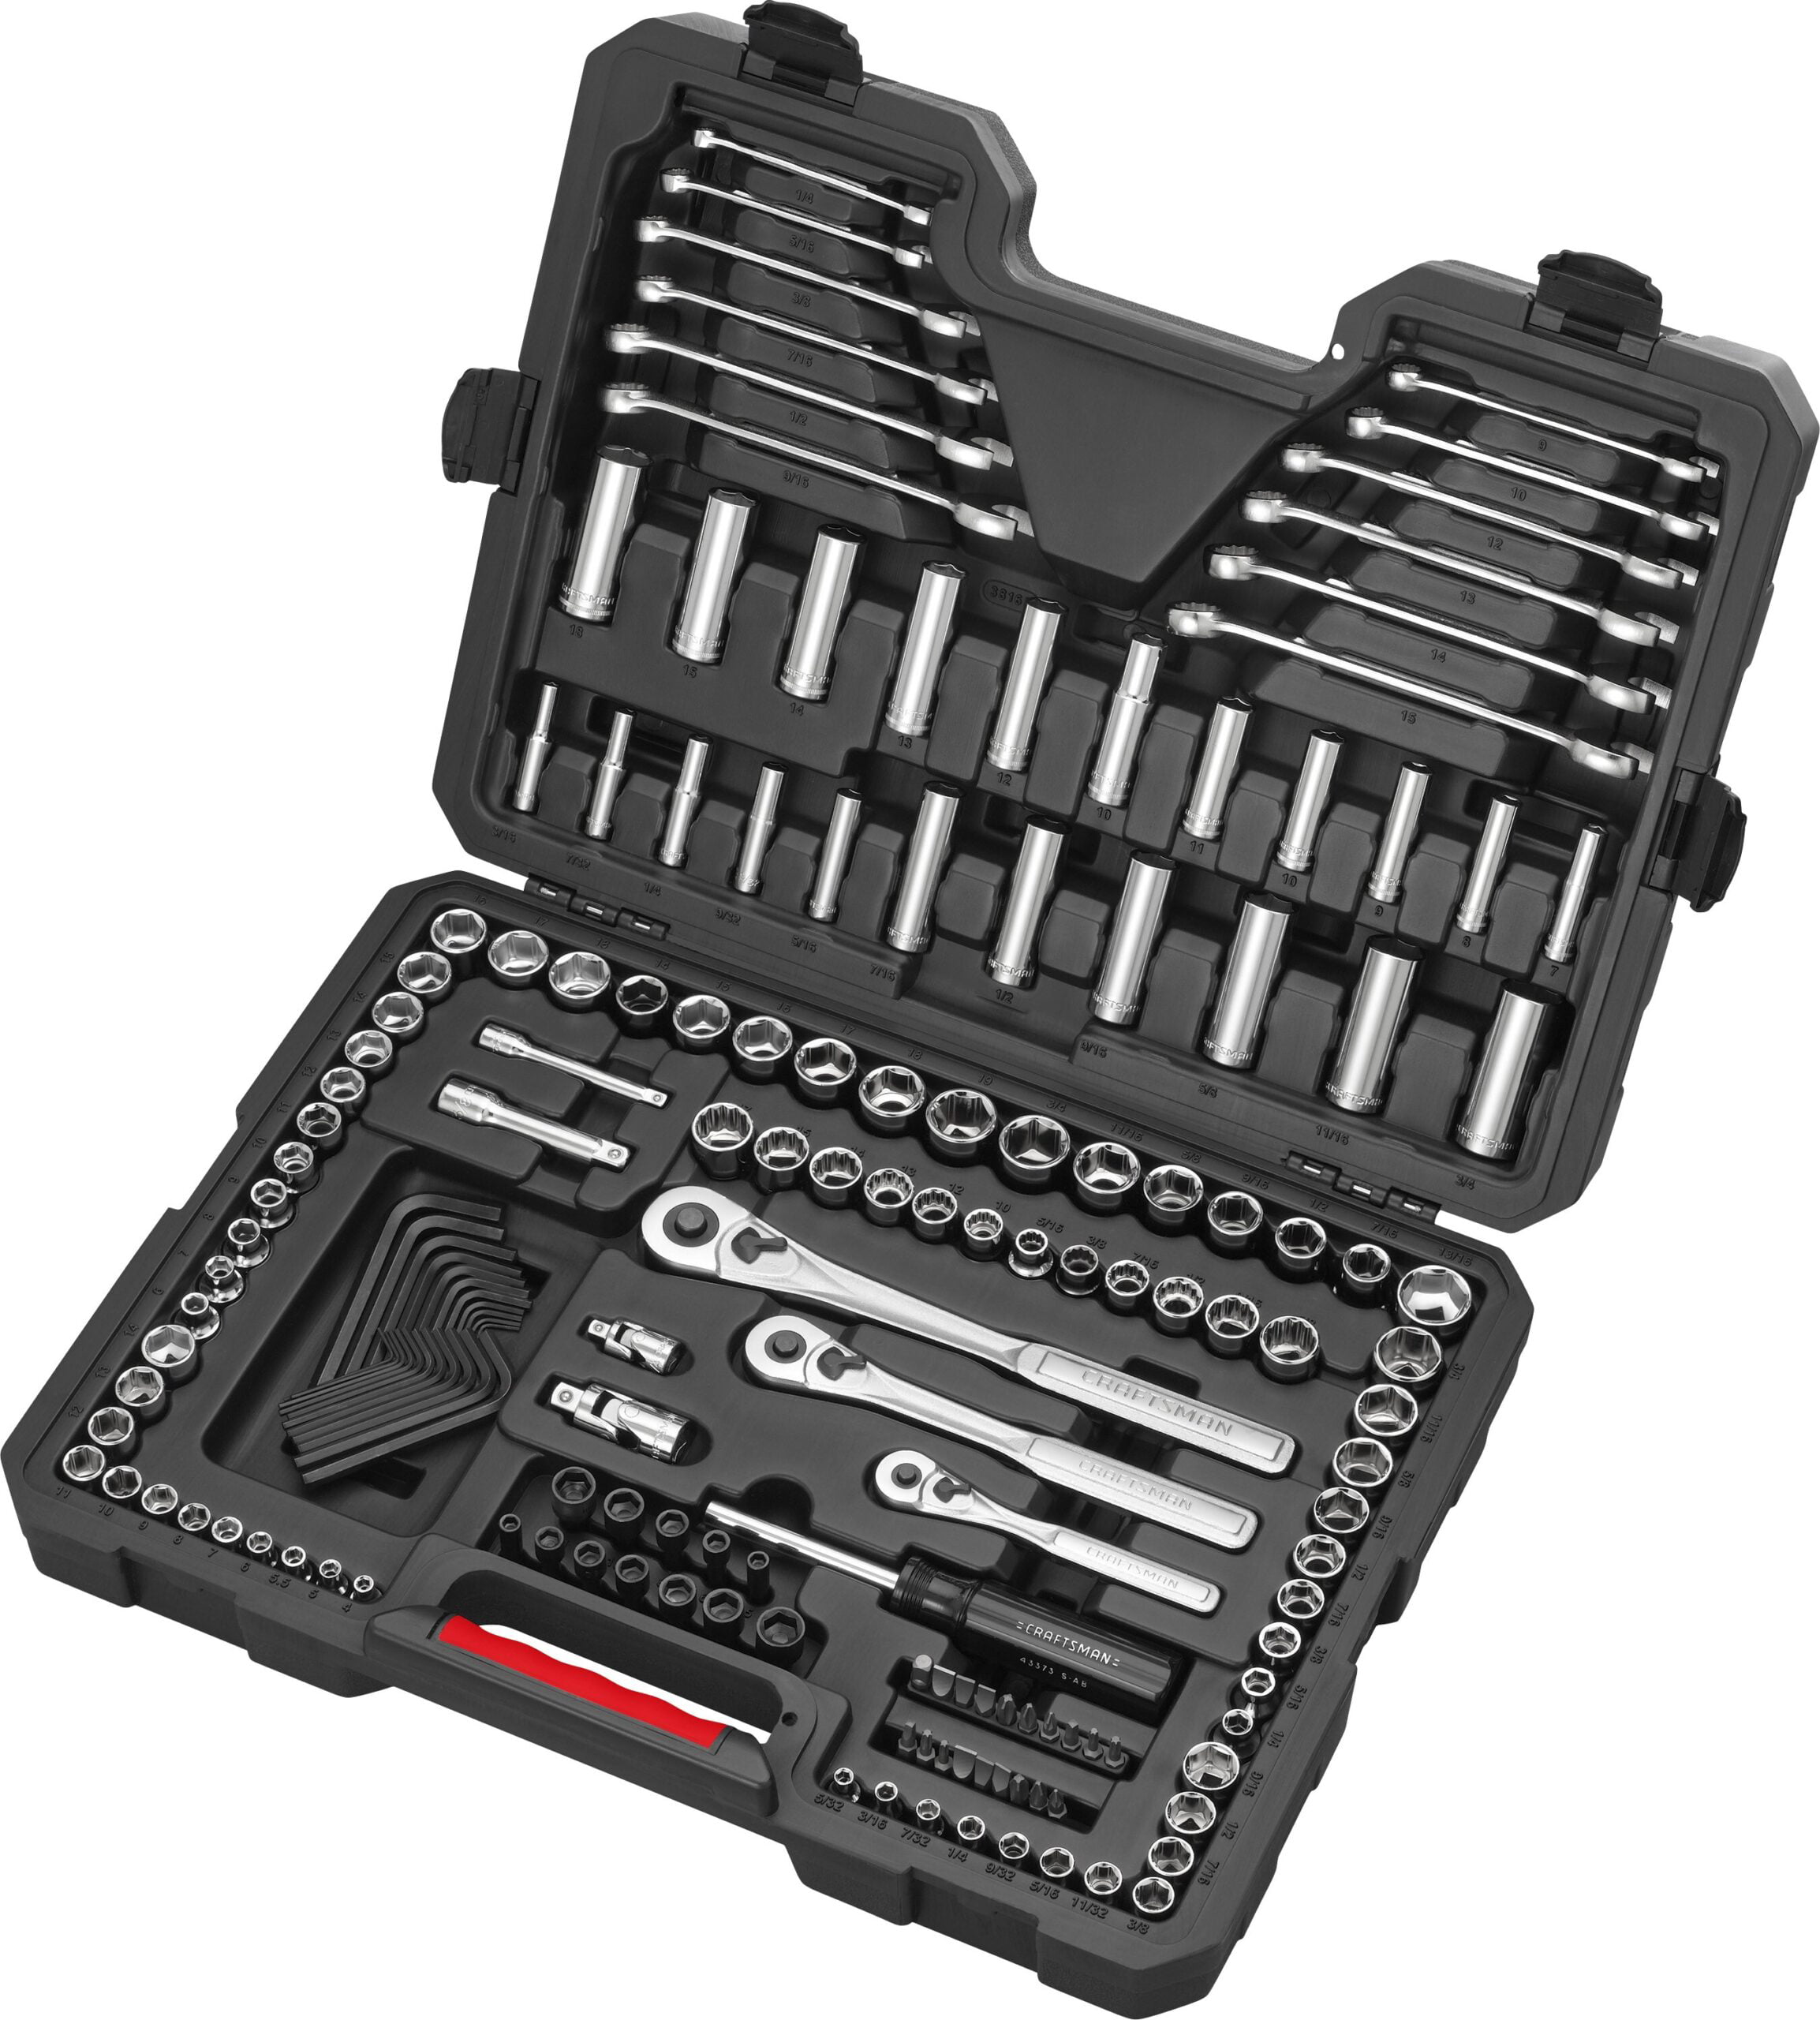 Craftsman 230 Pc Mechanics Tool Set Universal SAE Metric Ratchet Socket Kit Case 